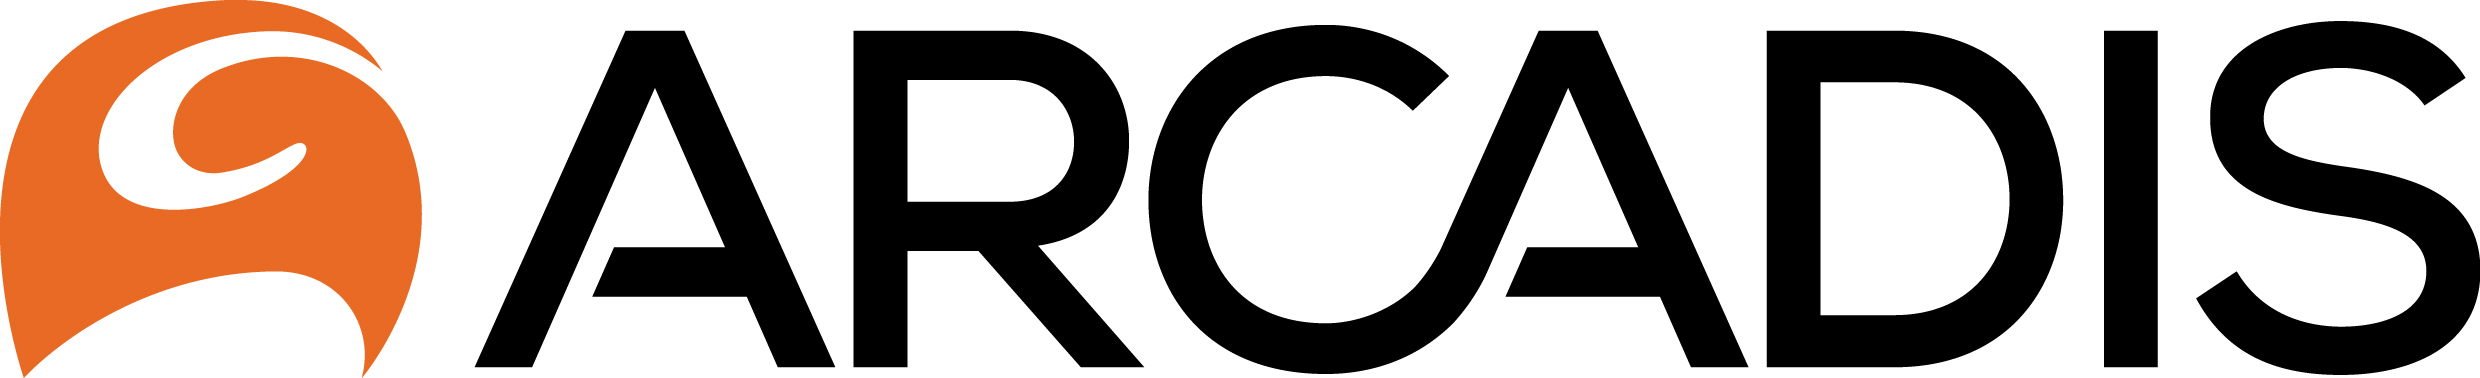 ARCADIS logo_for web.JPG